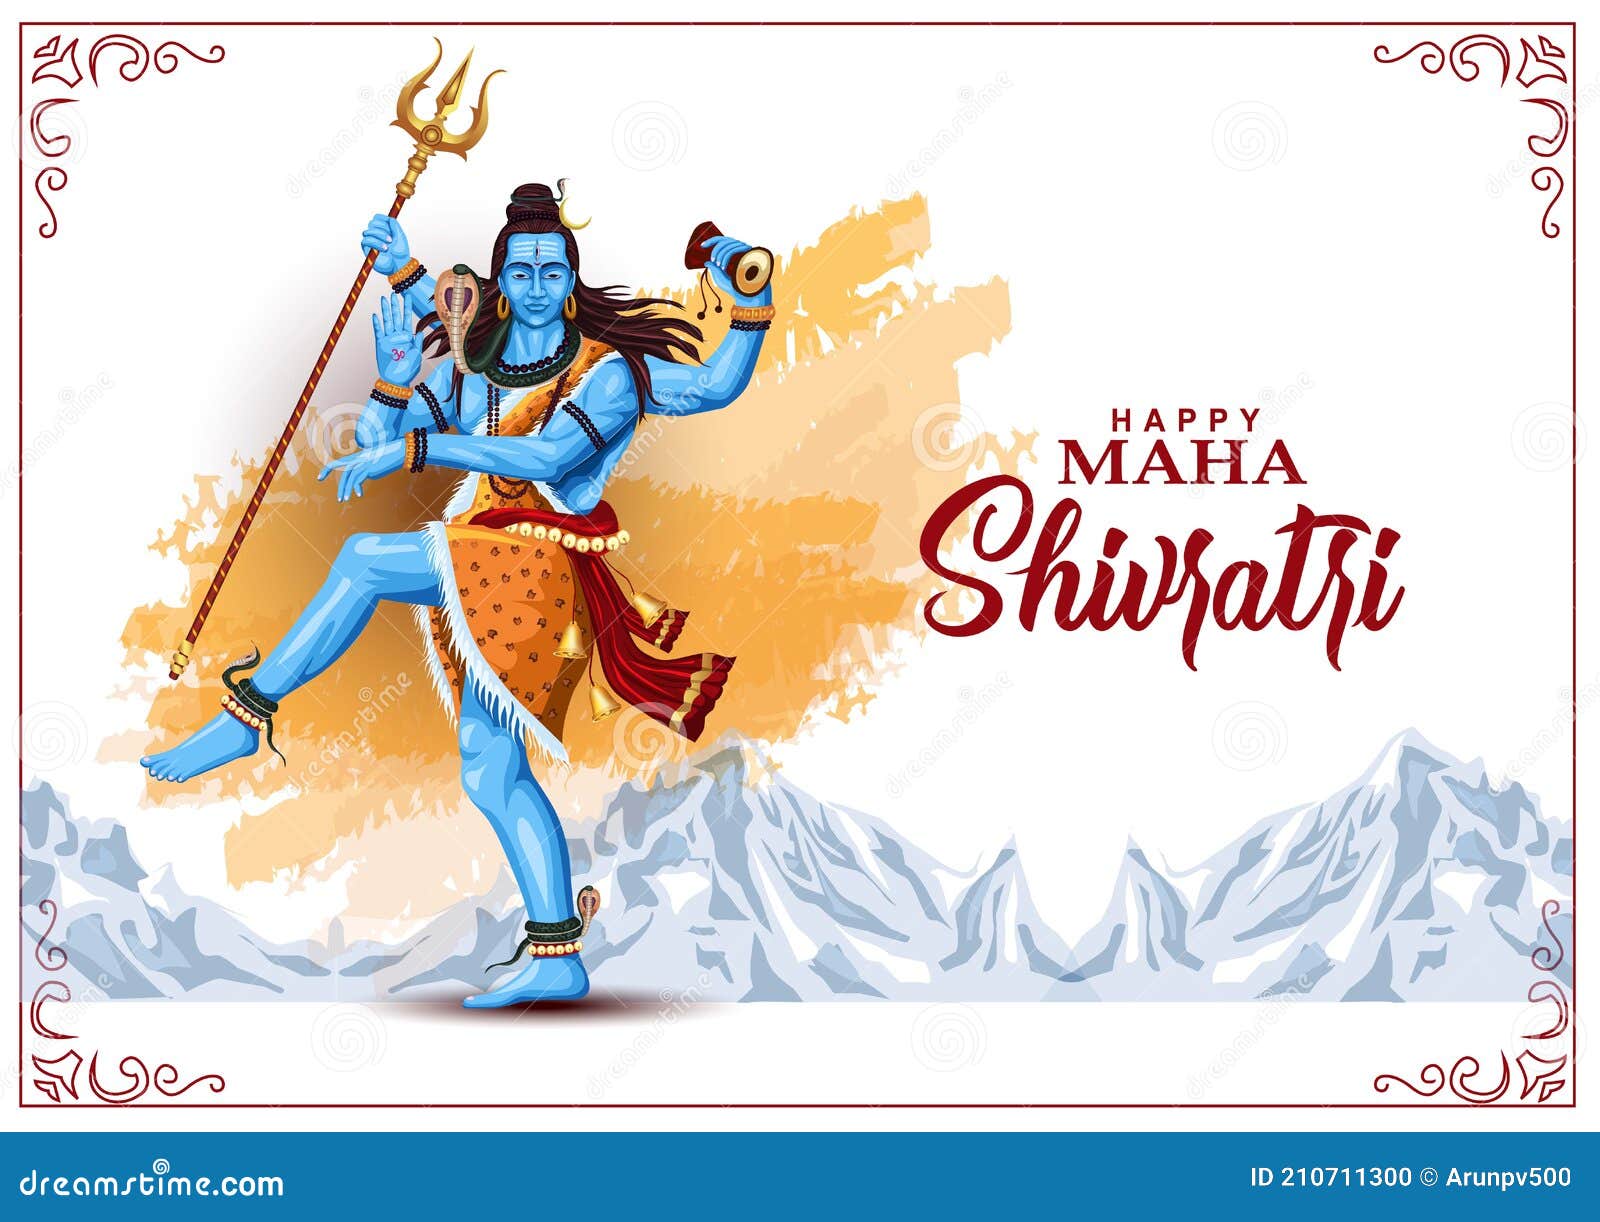 lord shiva thandav dance position, indian god with happy maha shivratri or mahashivratri.   